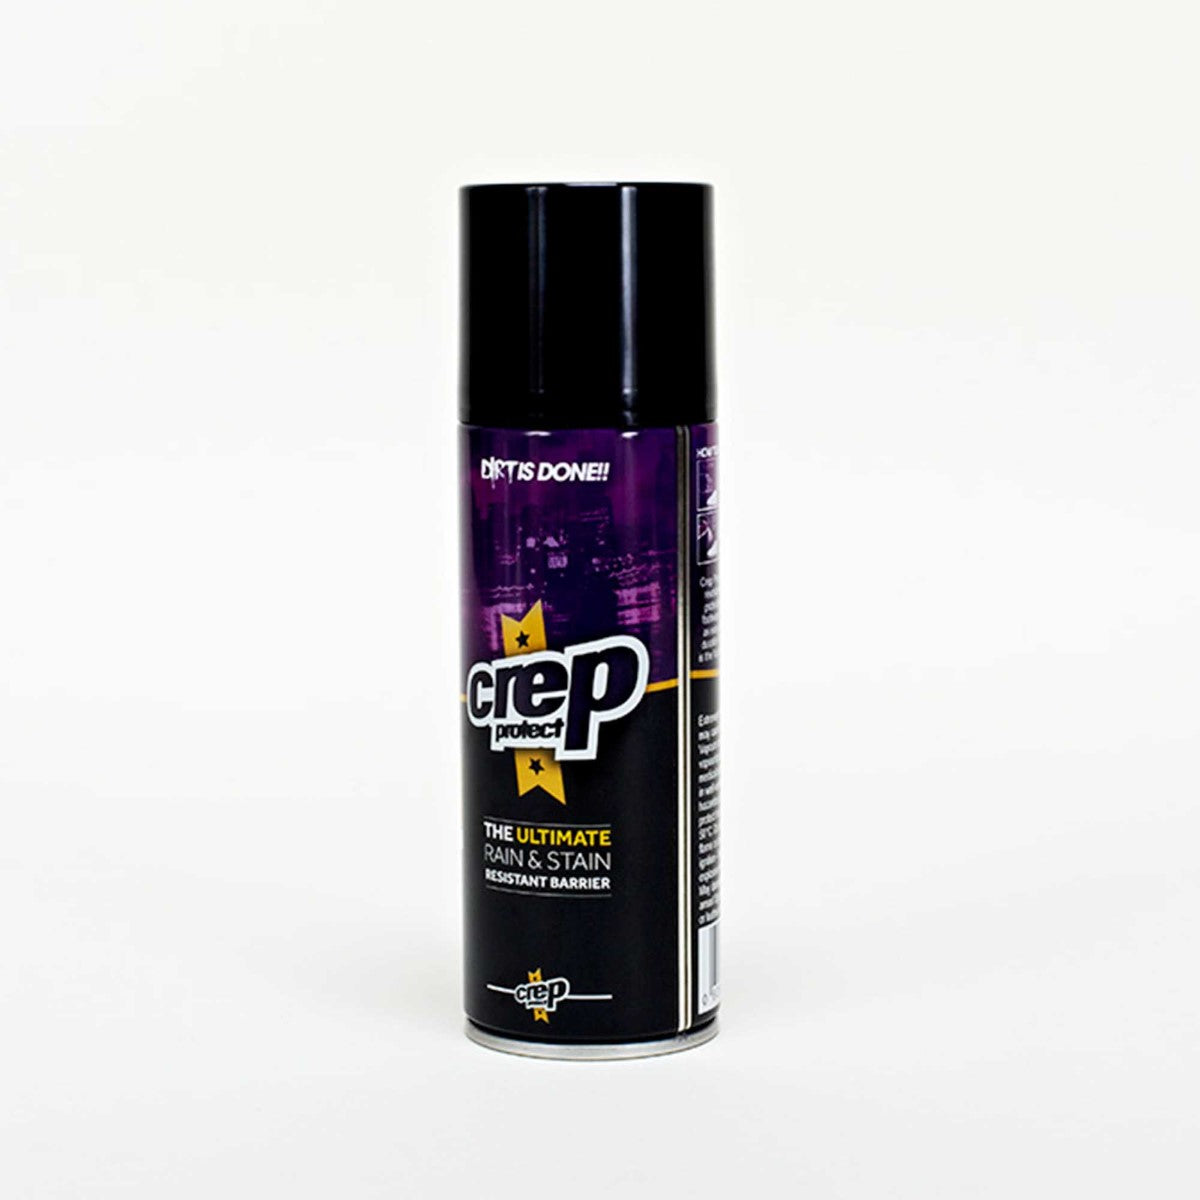 Crep Crep Protect Spray 200ml